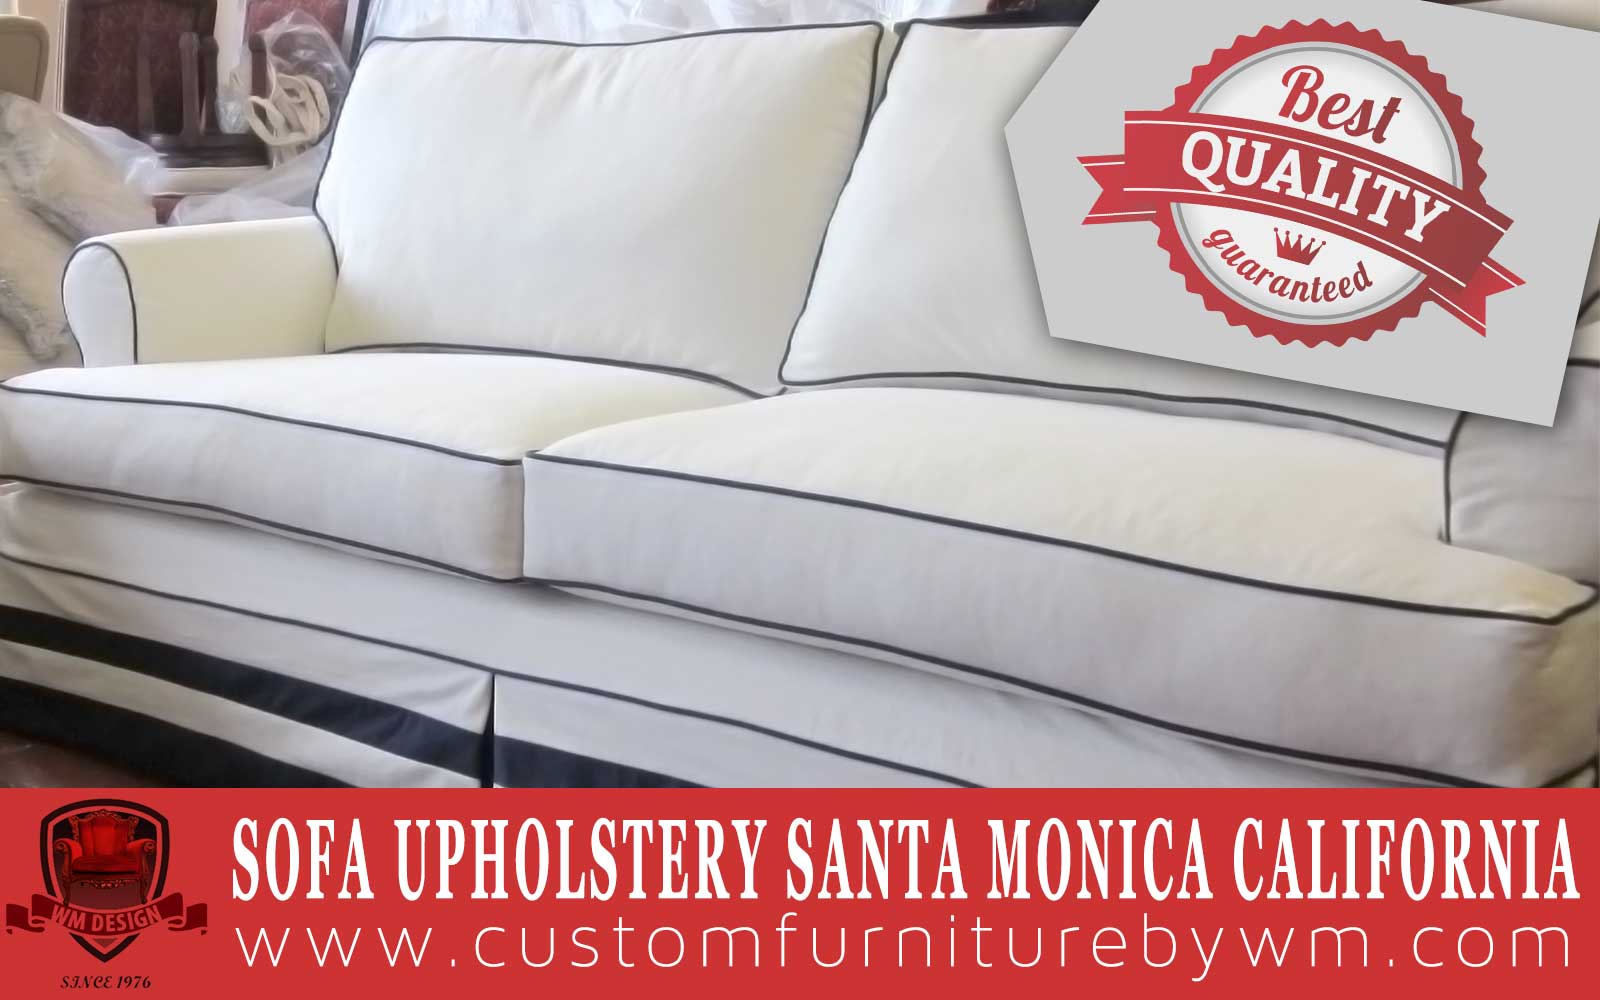 Sofa upholstery in Santa Monica California. Custom made sofas by WM Upholstery